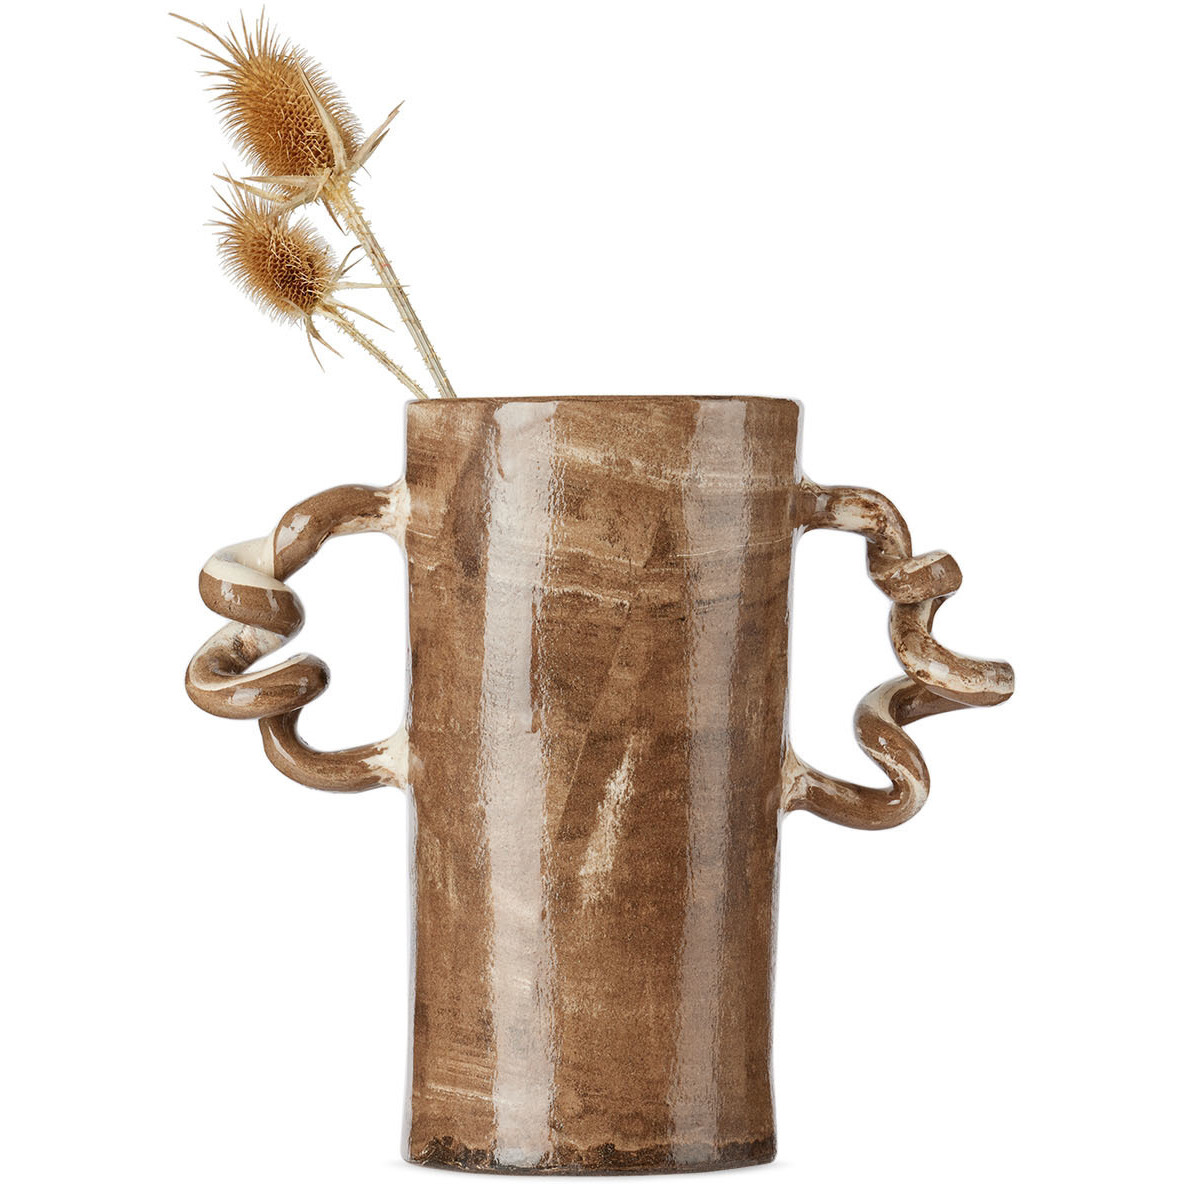 Harlie Brown Studio Brown & White Wiggle Vase - image 1